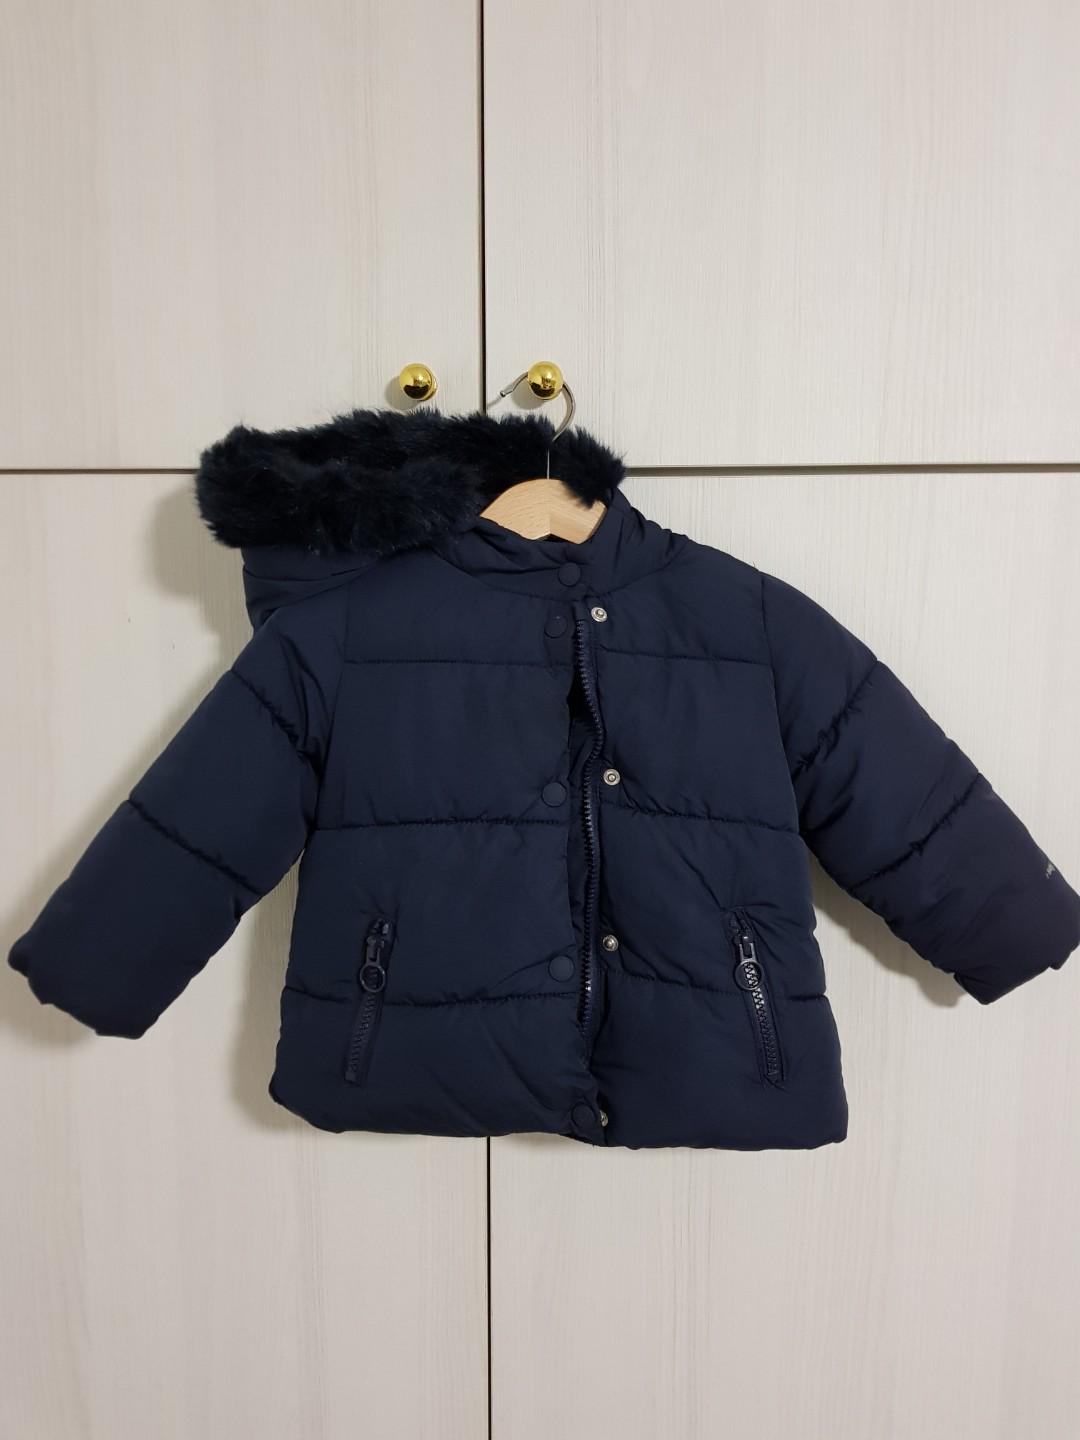 Zara Navy Blue Baby Girl Winter Jacket 